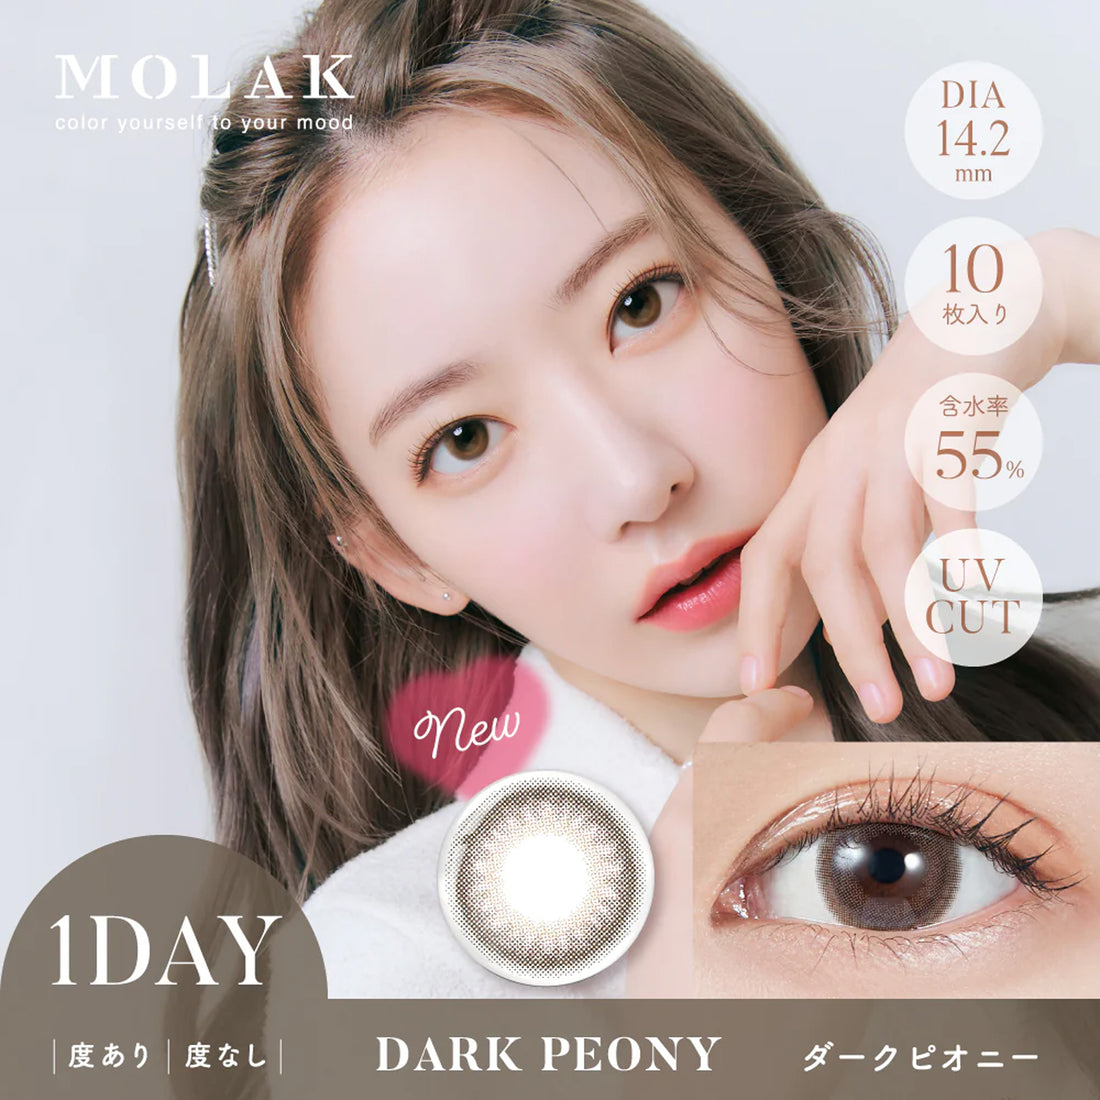 MOLAK 1Day Contact Lenses-Dark Peony 10pcs